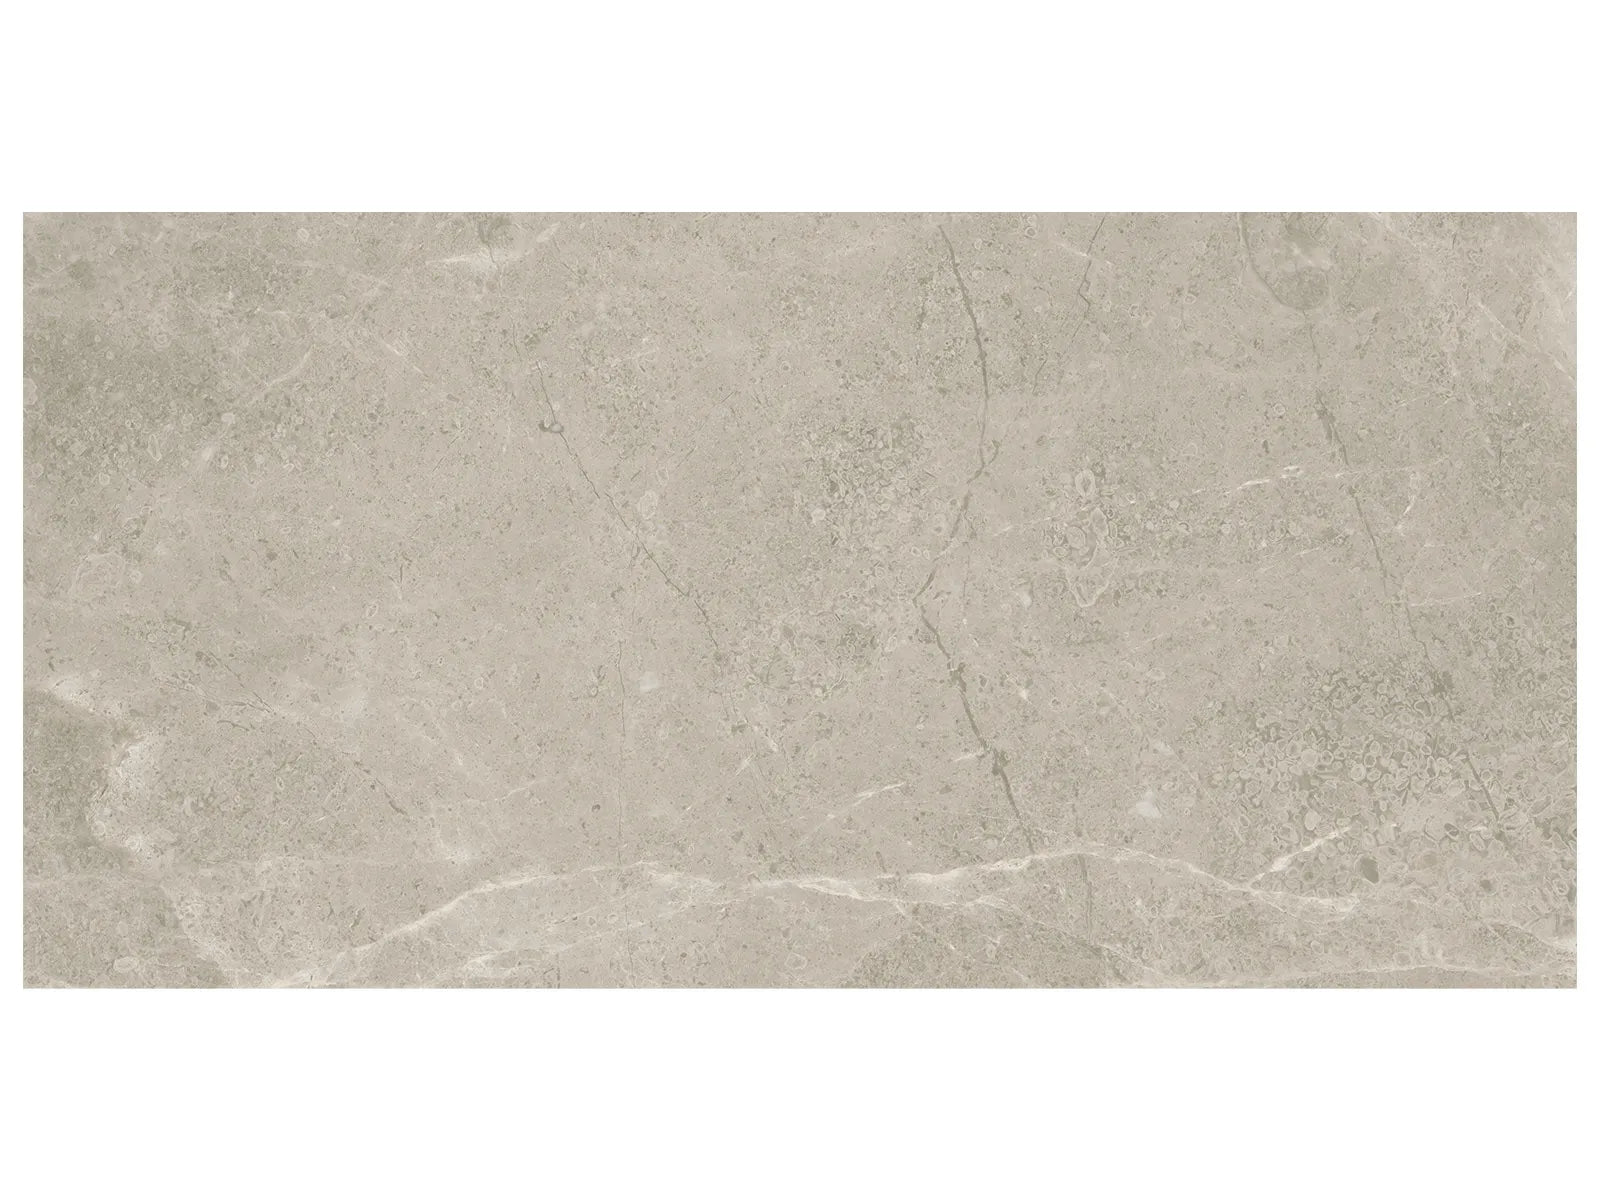 RITZ GRAY: Marble Field Tile (35¹⁵⁄₁₆"X17¹⁵⁄₁₆"X¹³⁄₁₆" | Honed)